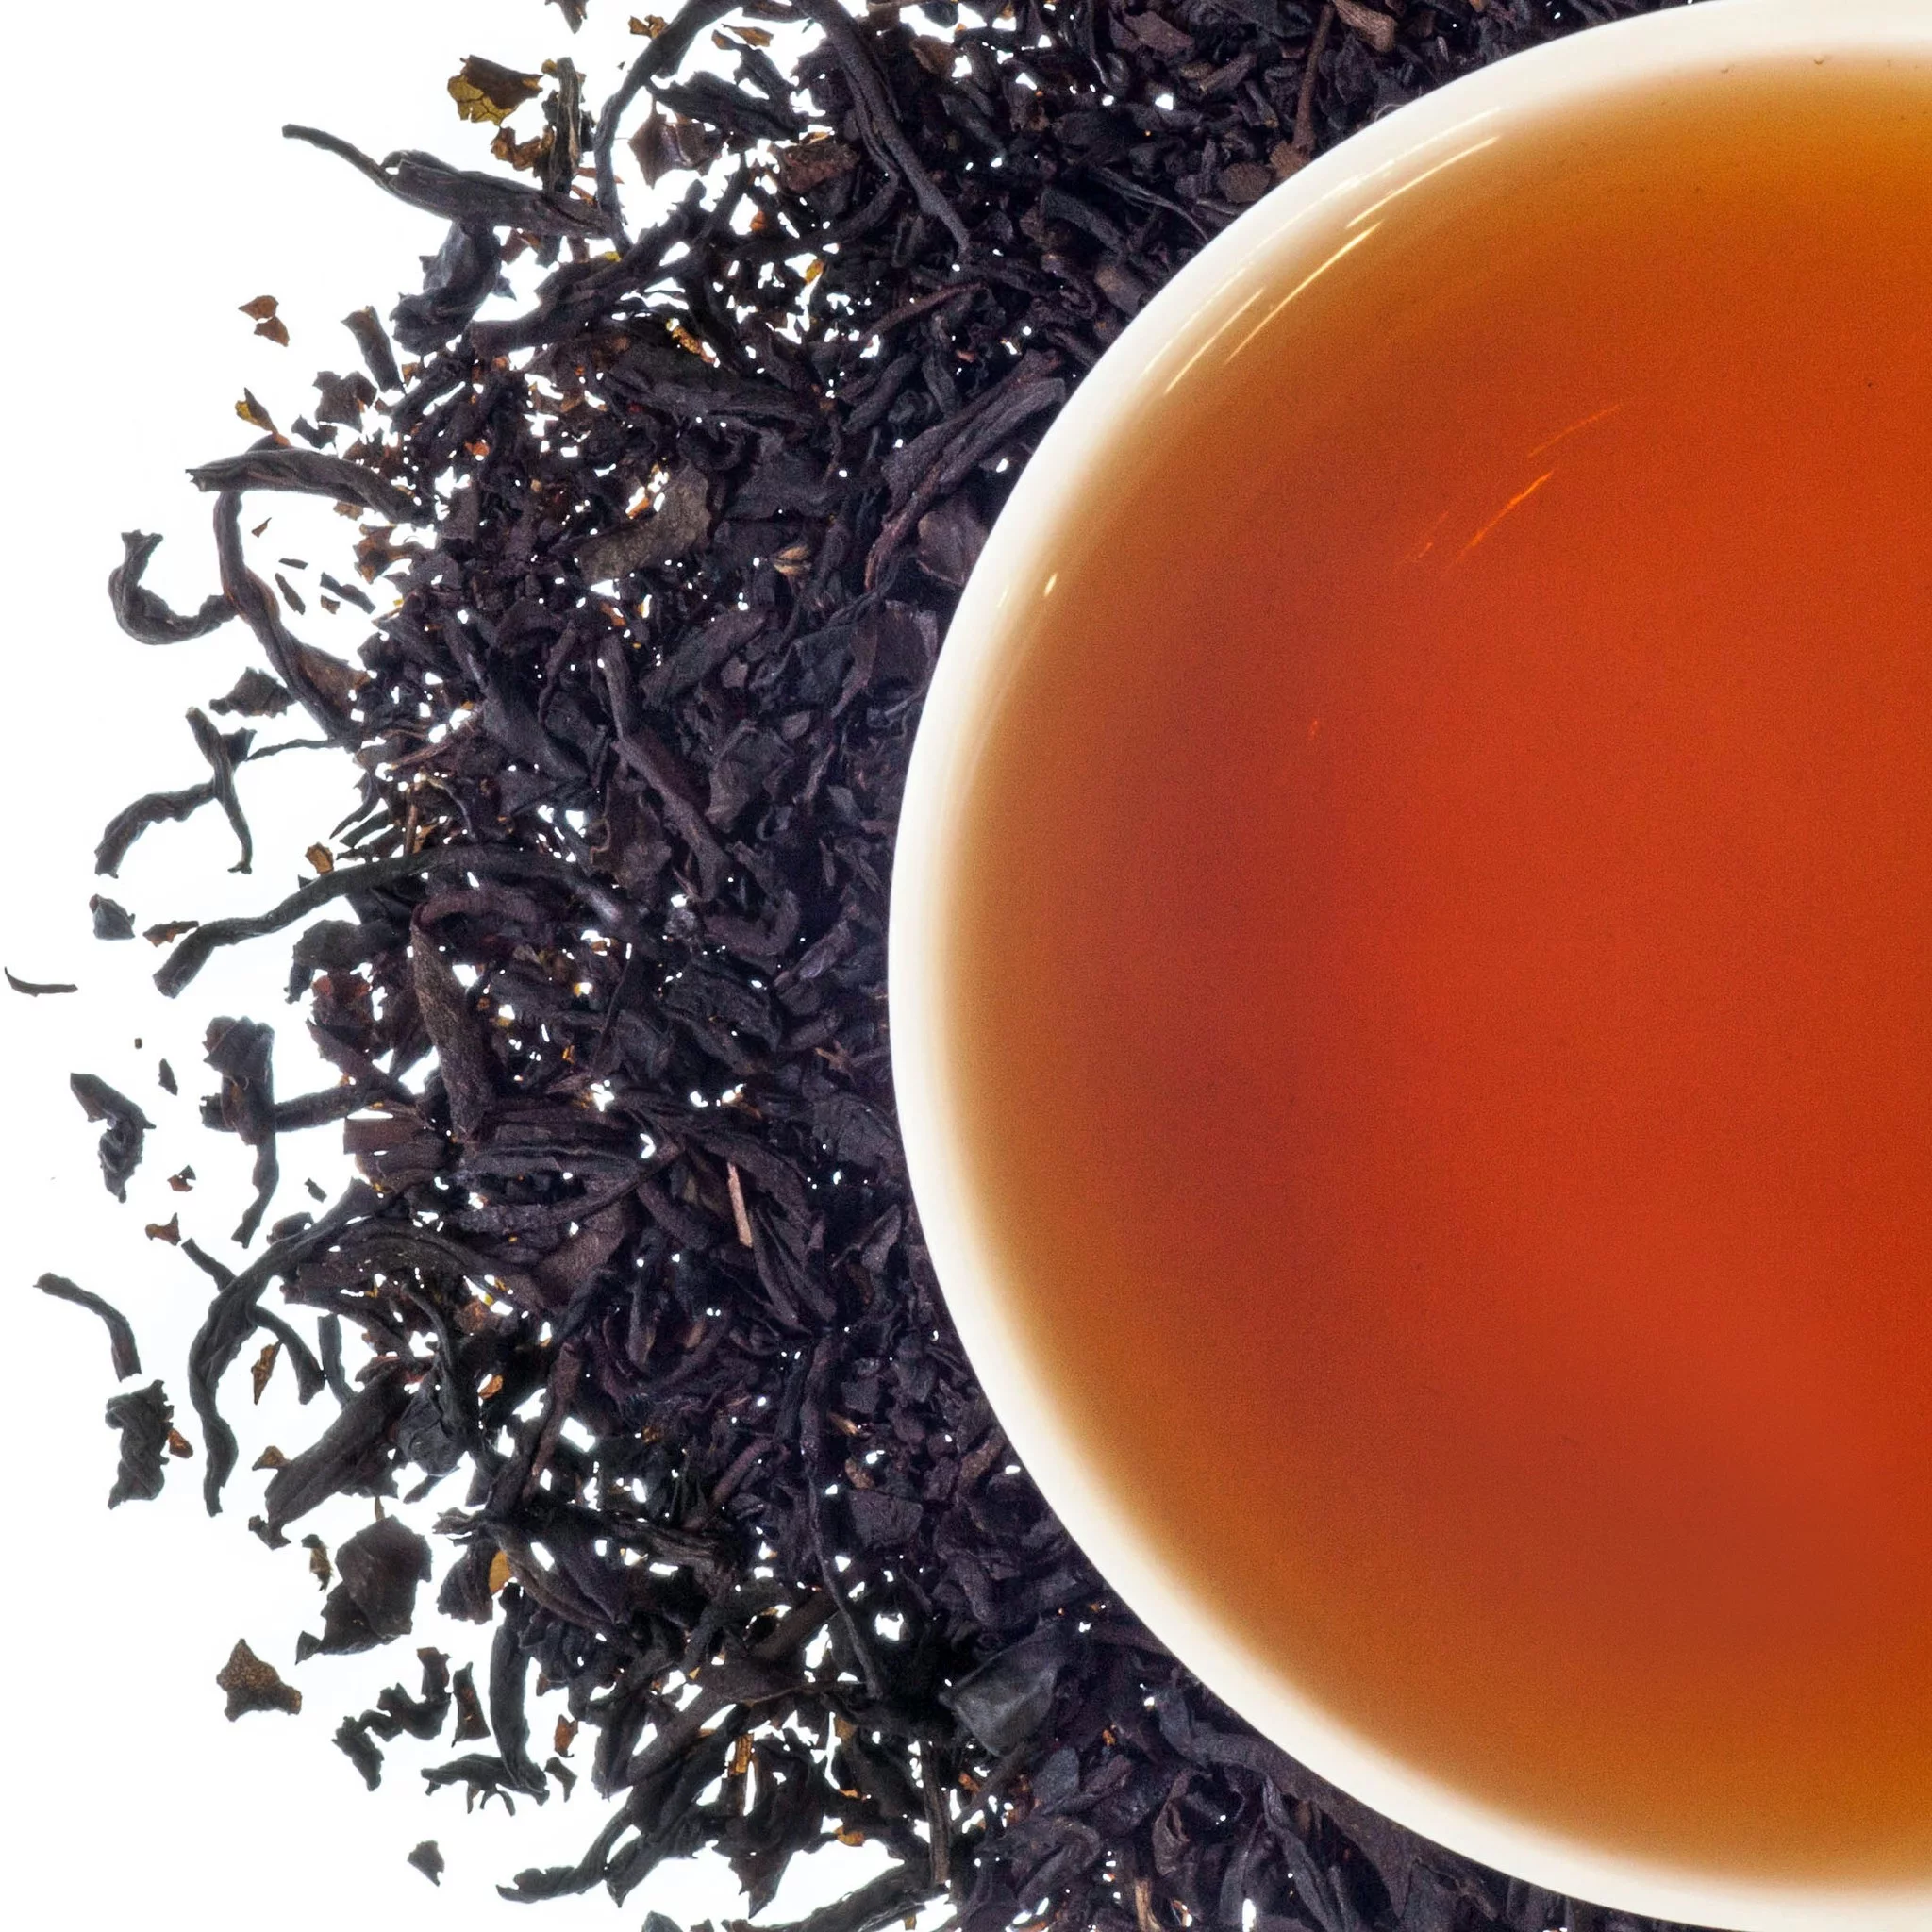 schwarzer tee gesunde ernährung toller geschmack